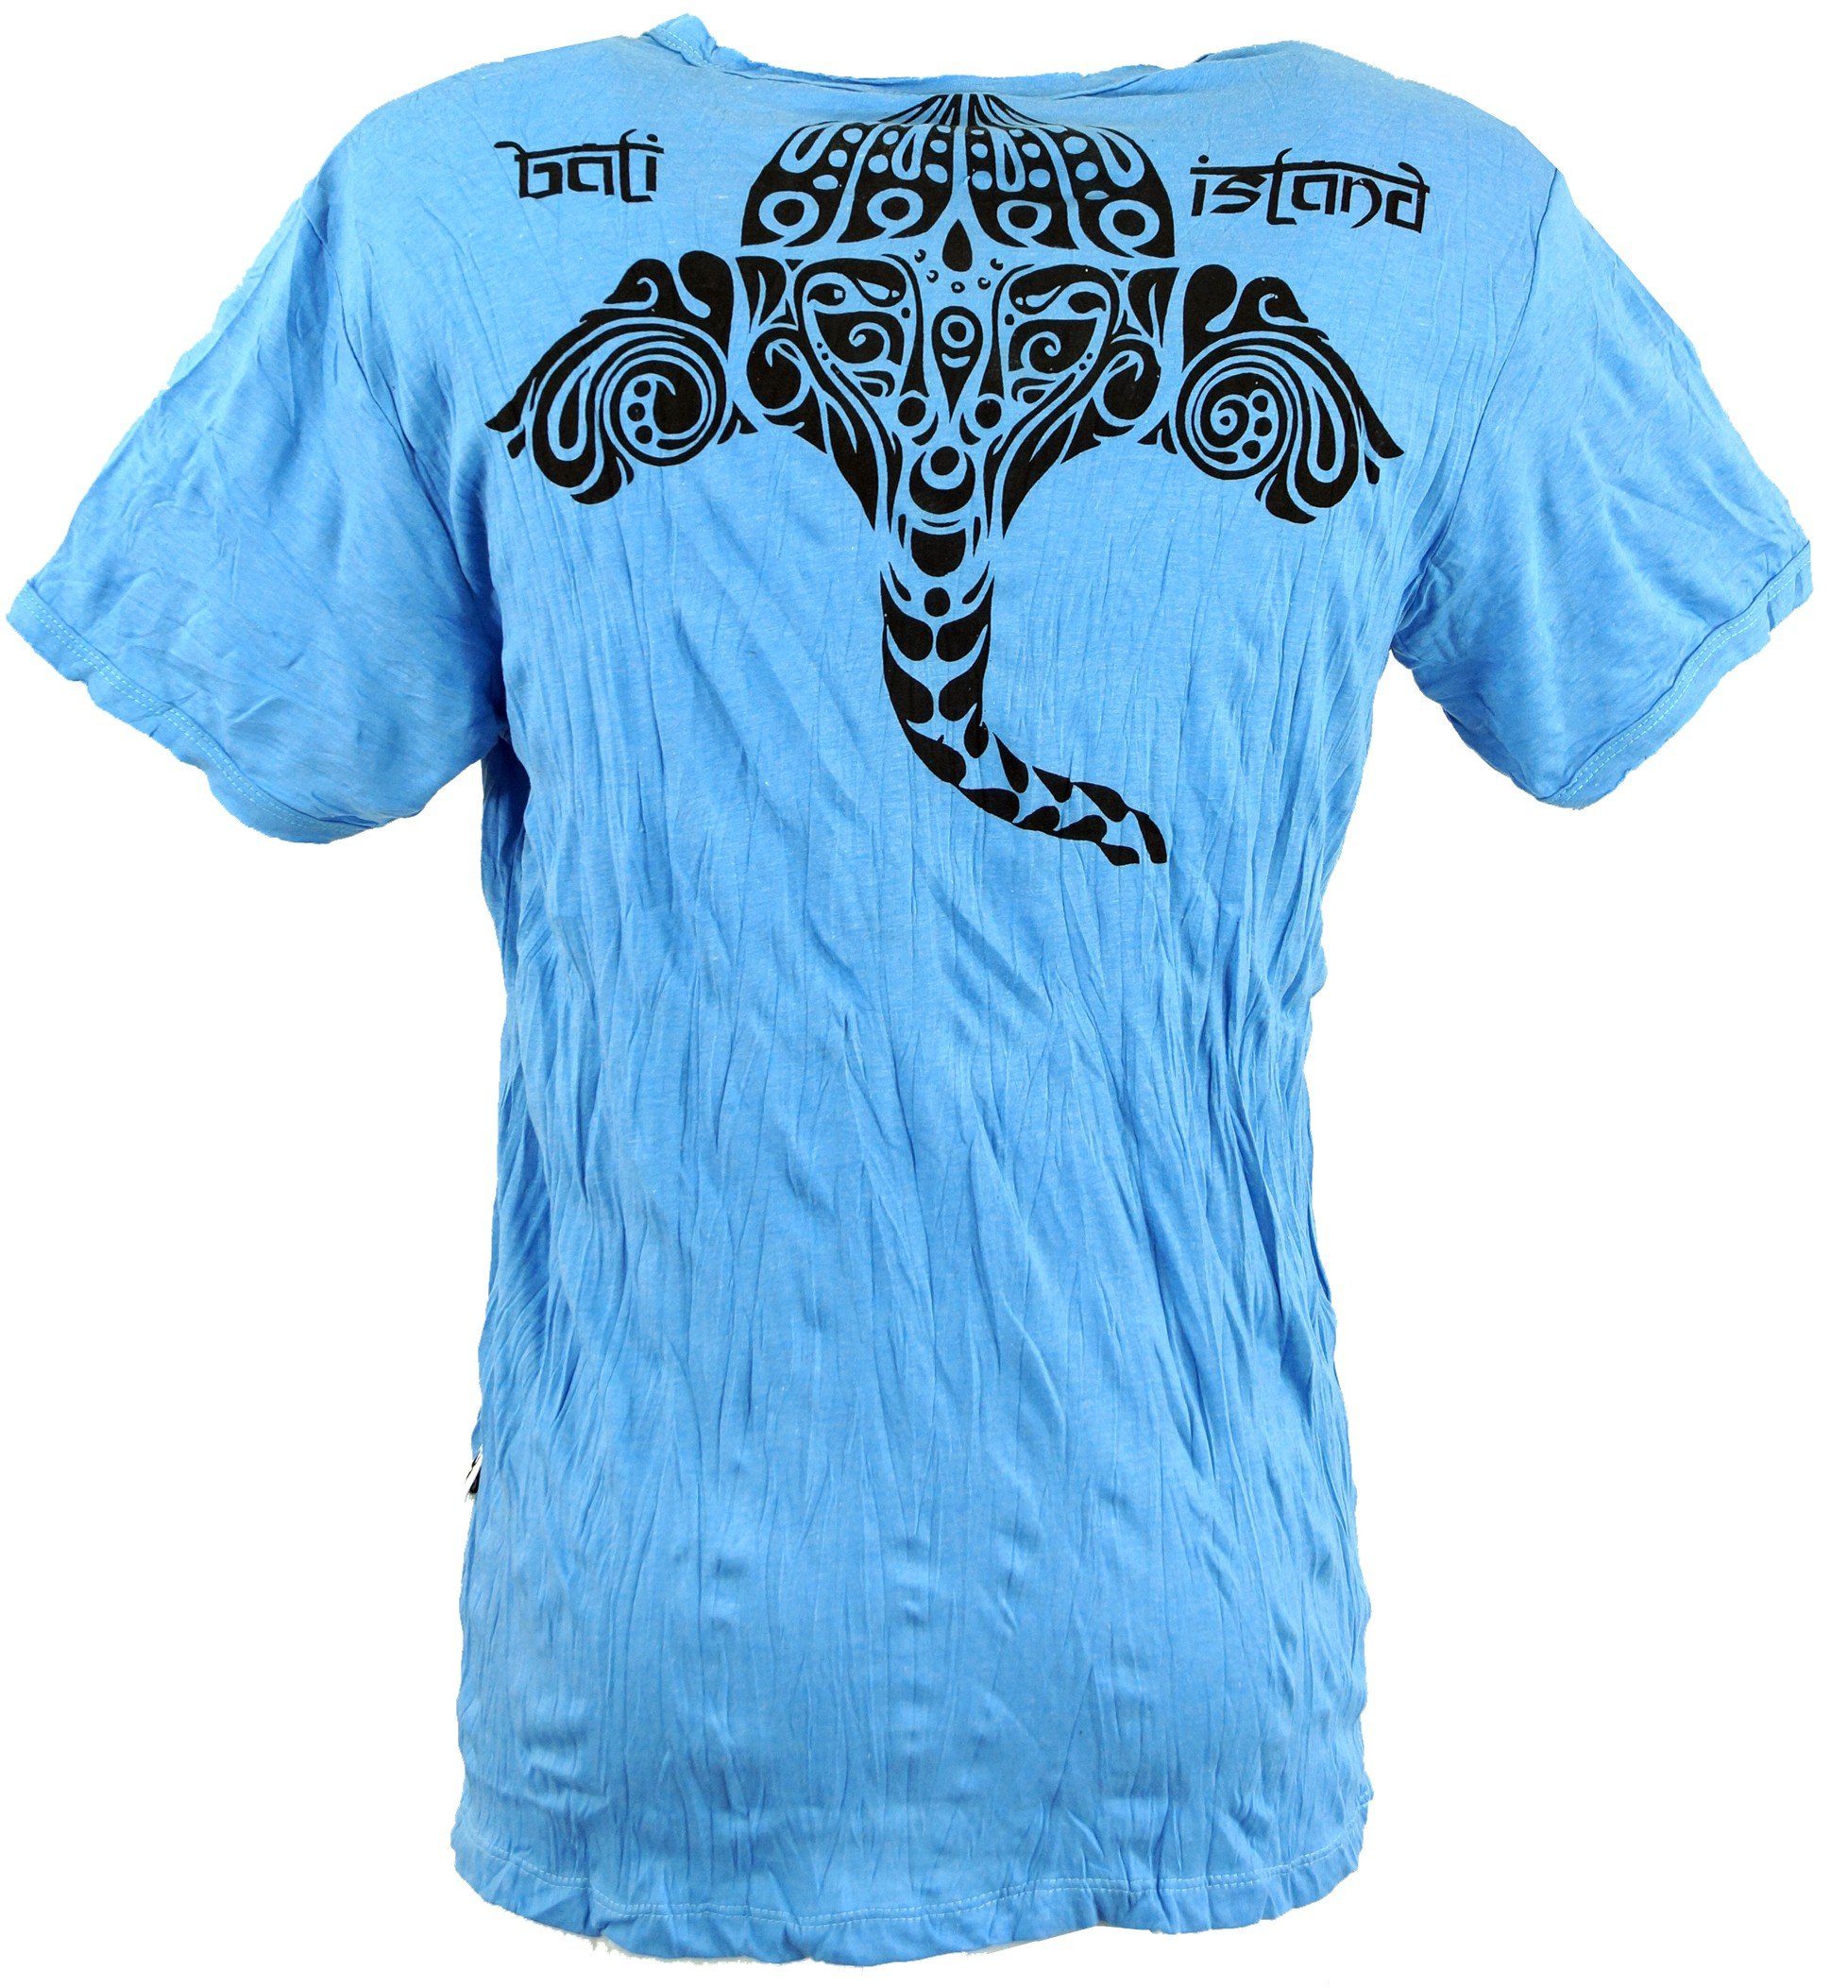 Guru-Shop Goa Sure Ganesha alternative Style, T-Shirt Bekleidung Tribal T-Shirt - hellblau Festival,